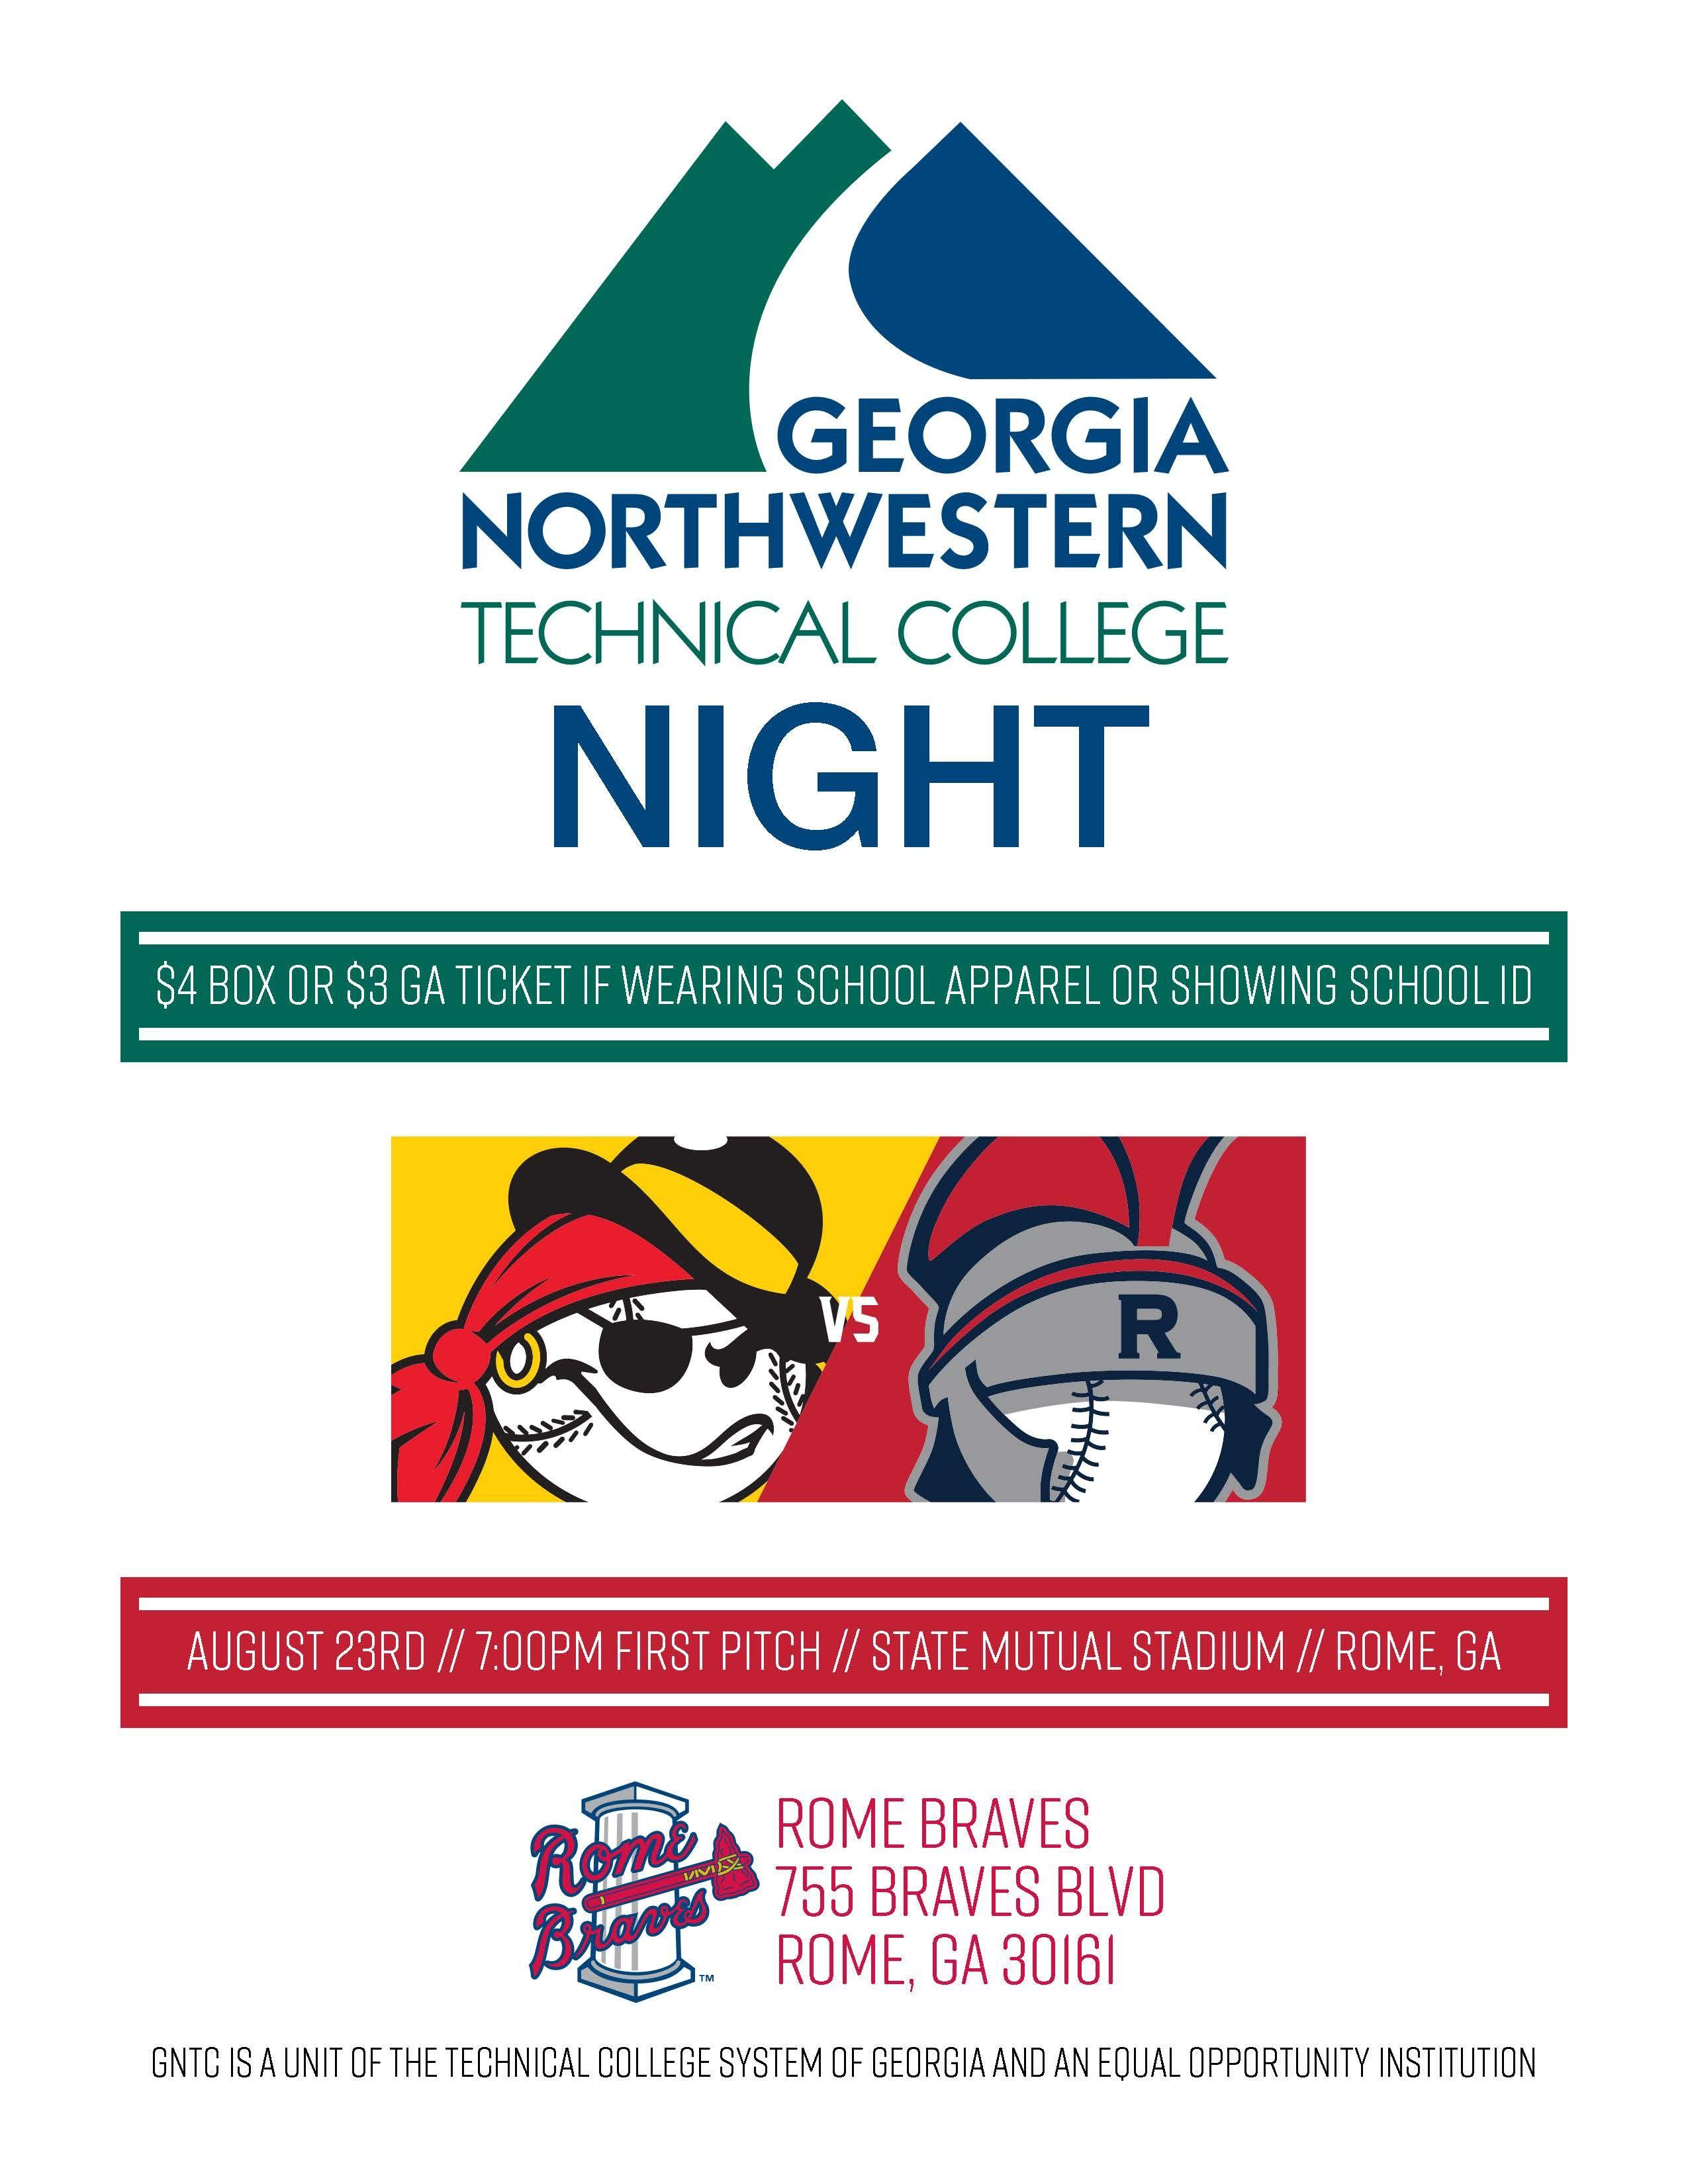 GNTC Logo - It's Georgia Northwestern Technical College Night at State Mutual